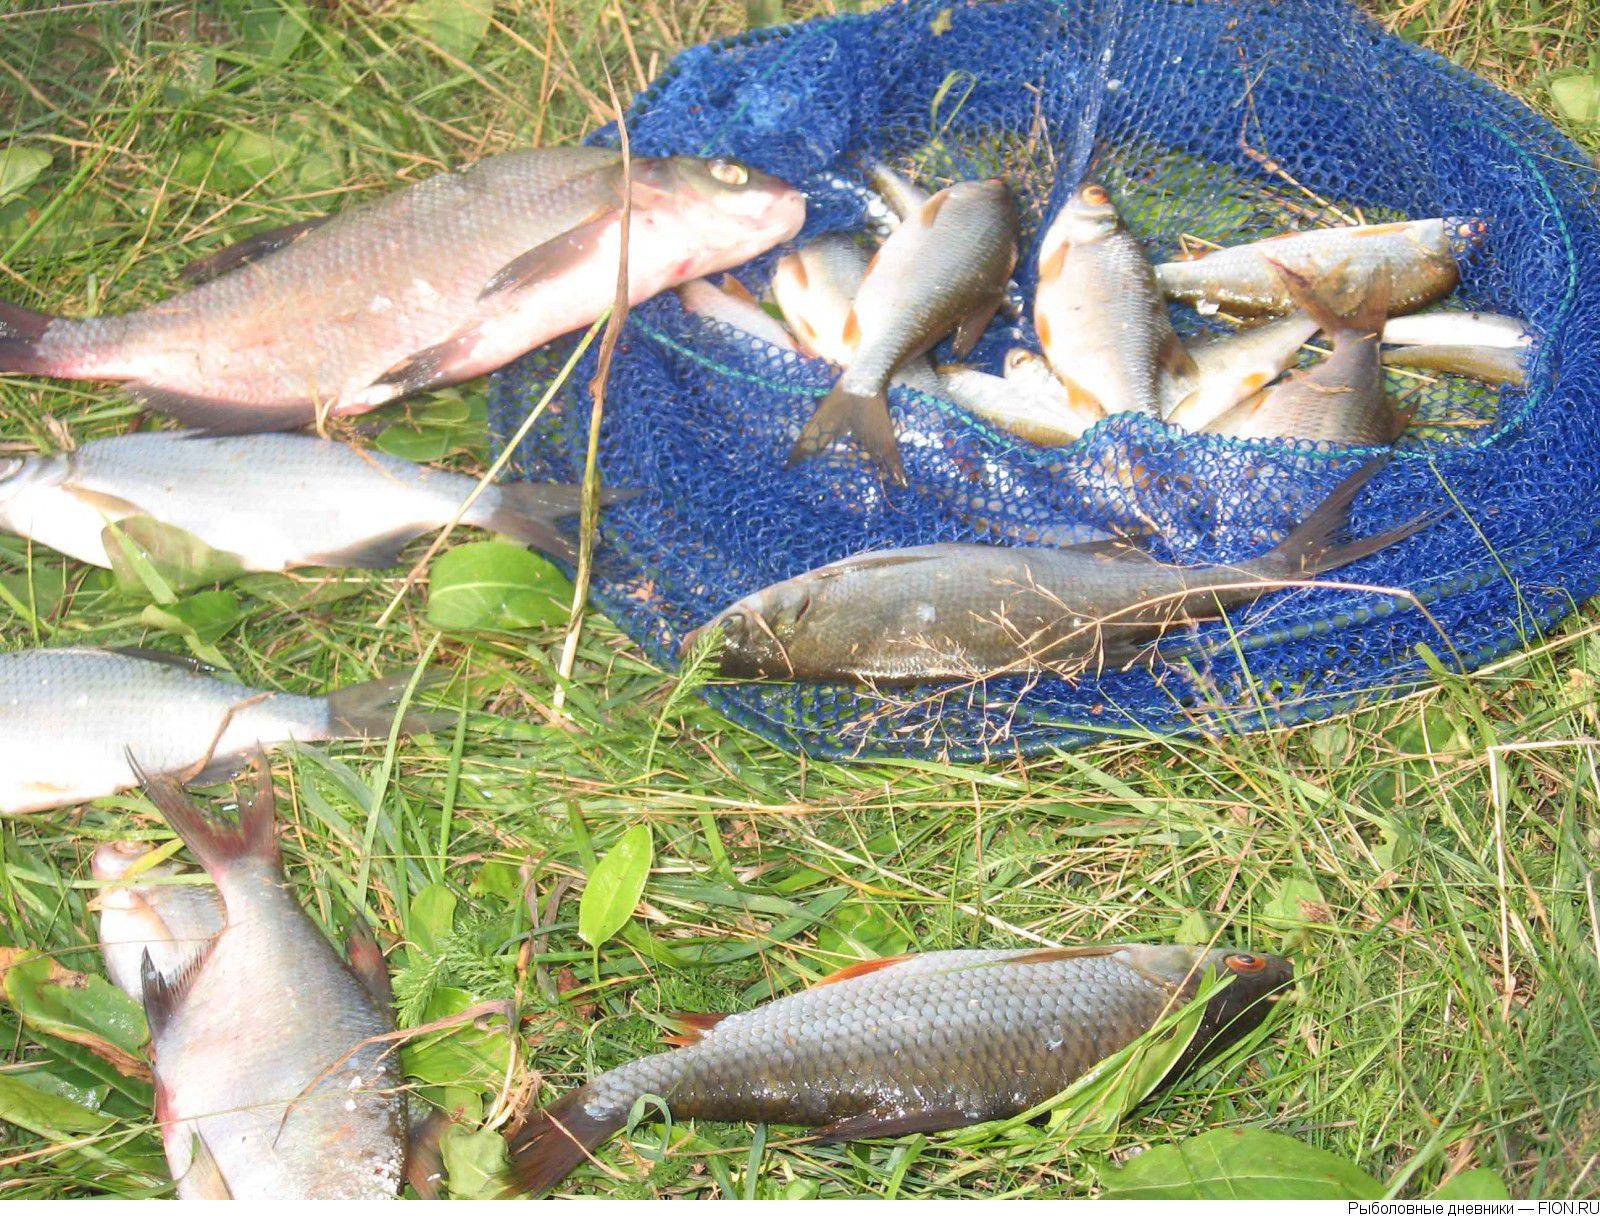 Рыбалка на реке клязьма - все про рыбалку